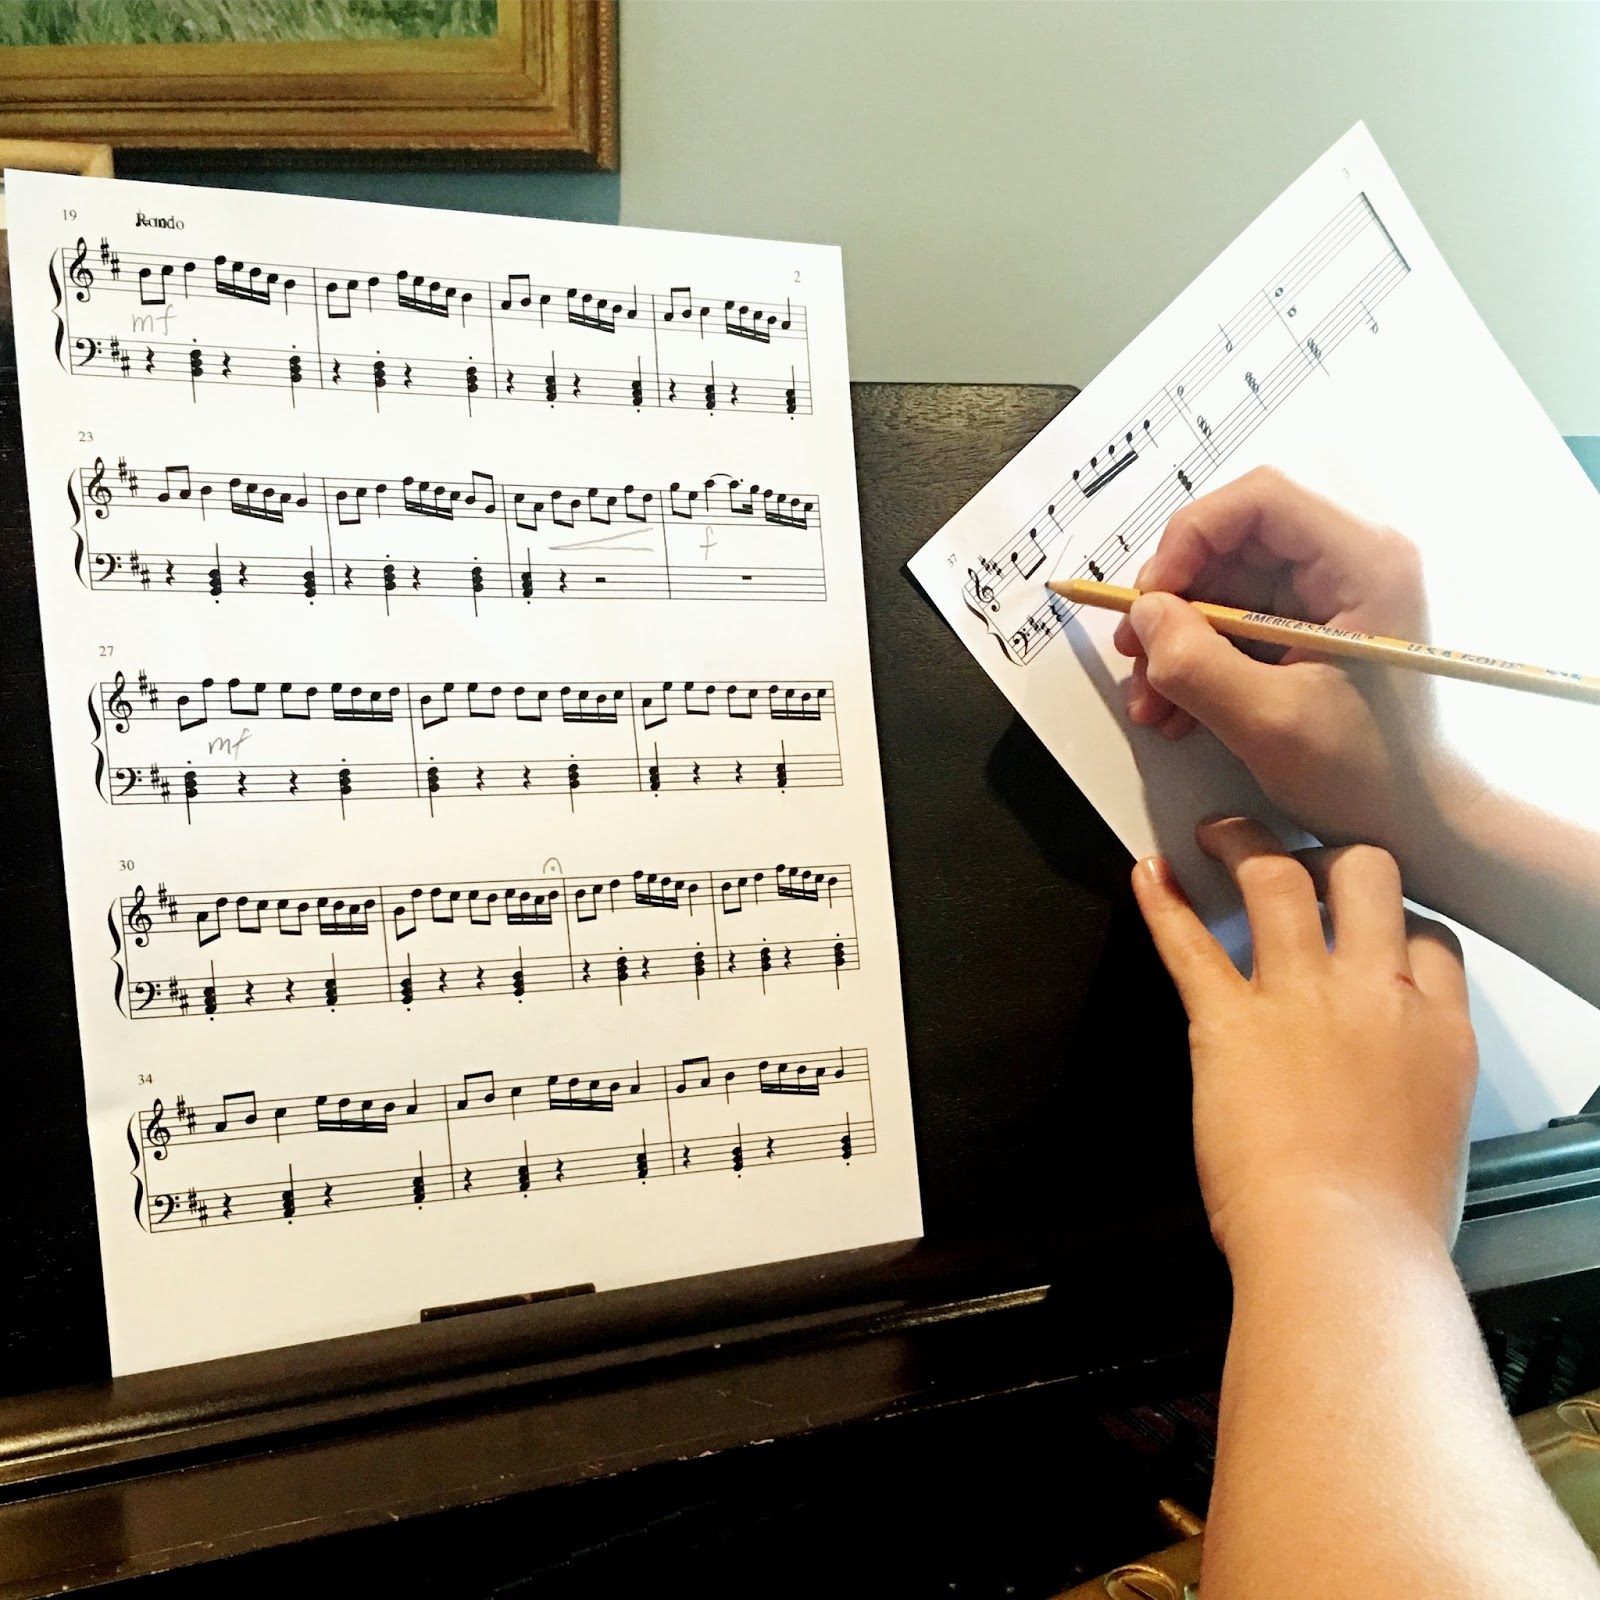 Print This Shark-Themed Piano Practice Pack - WunderKeys